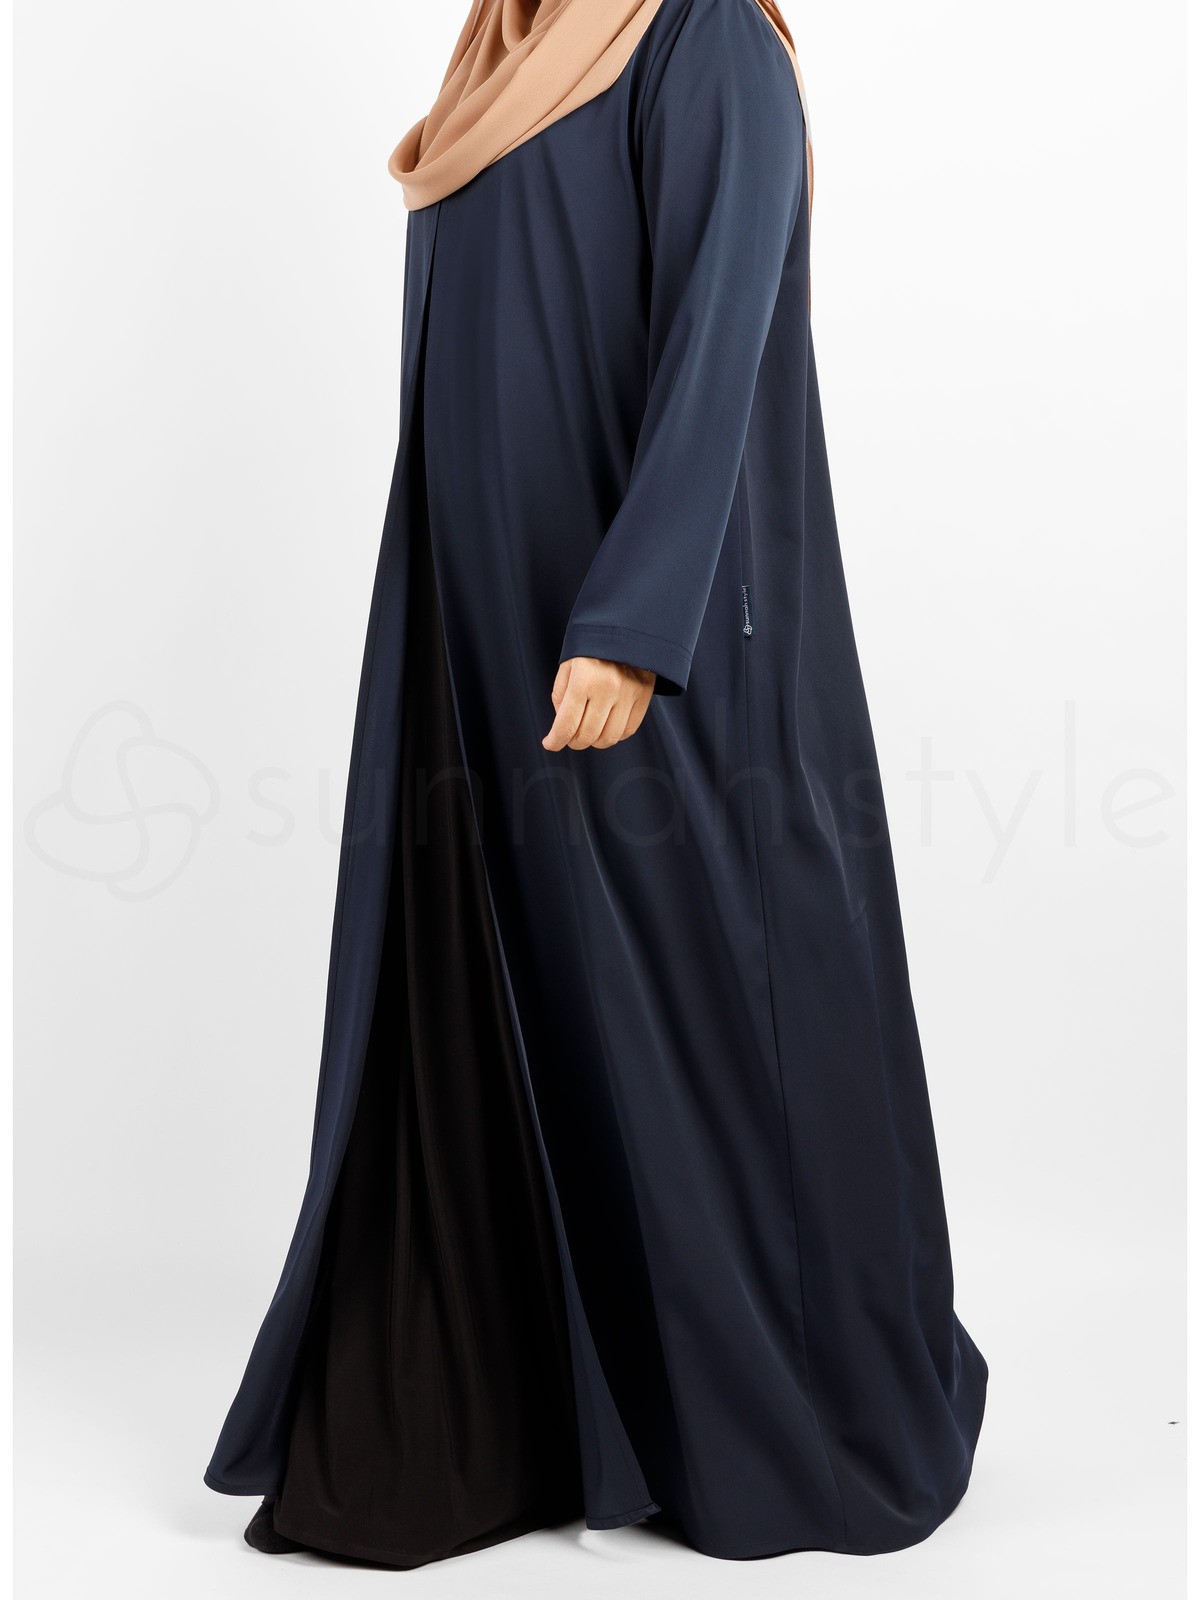 Sunnah Style - Classic Robe (Navy Blue)